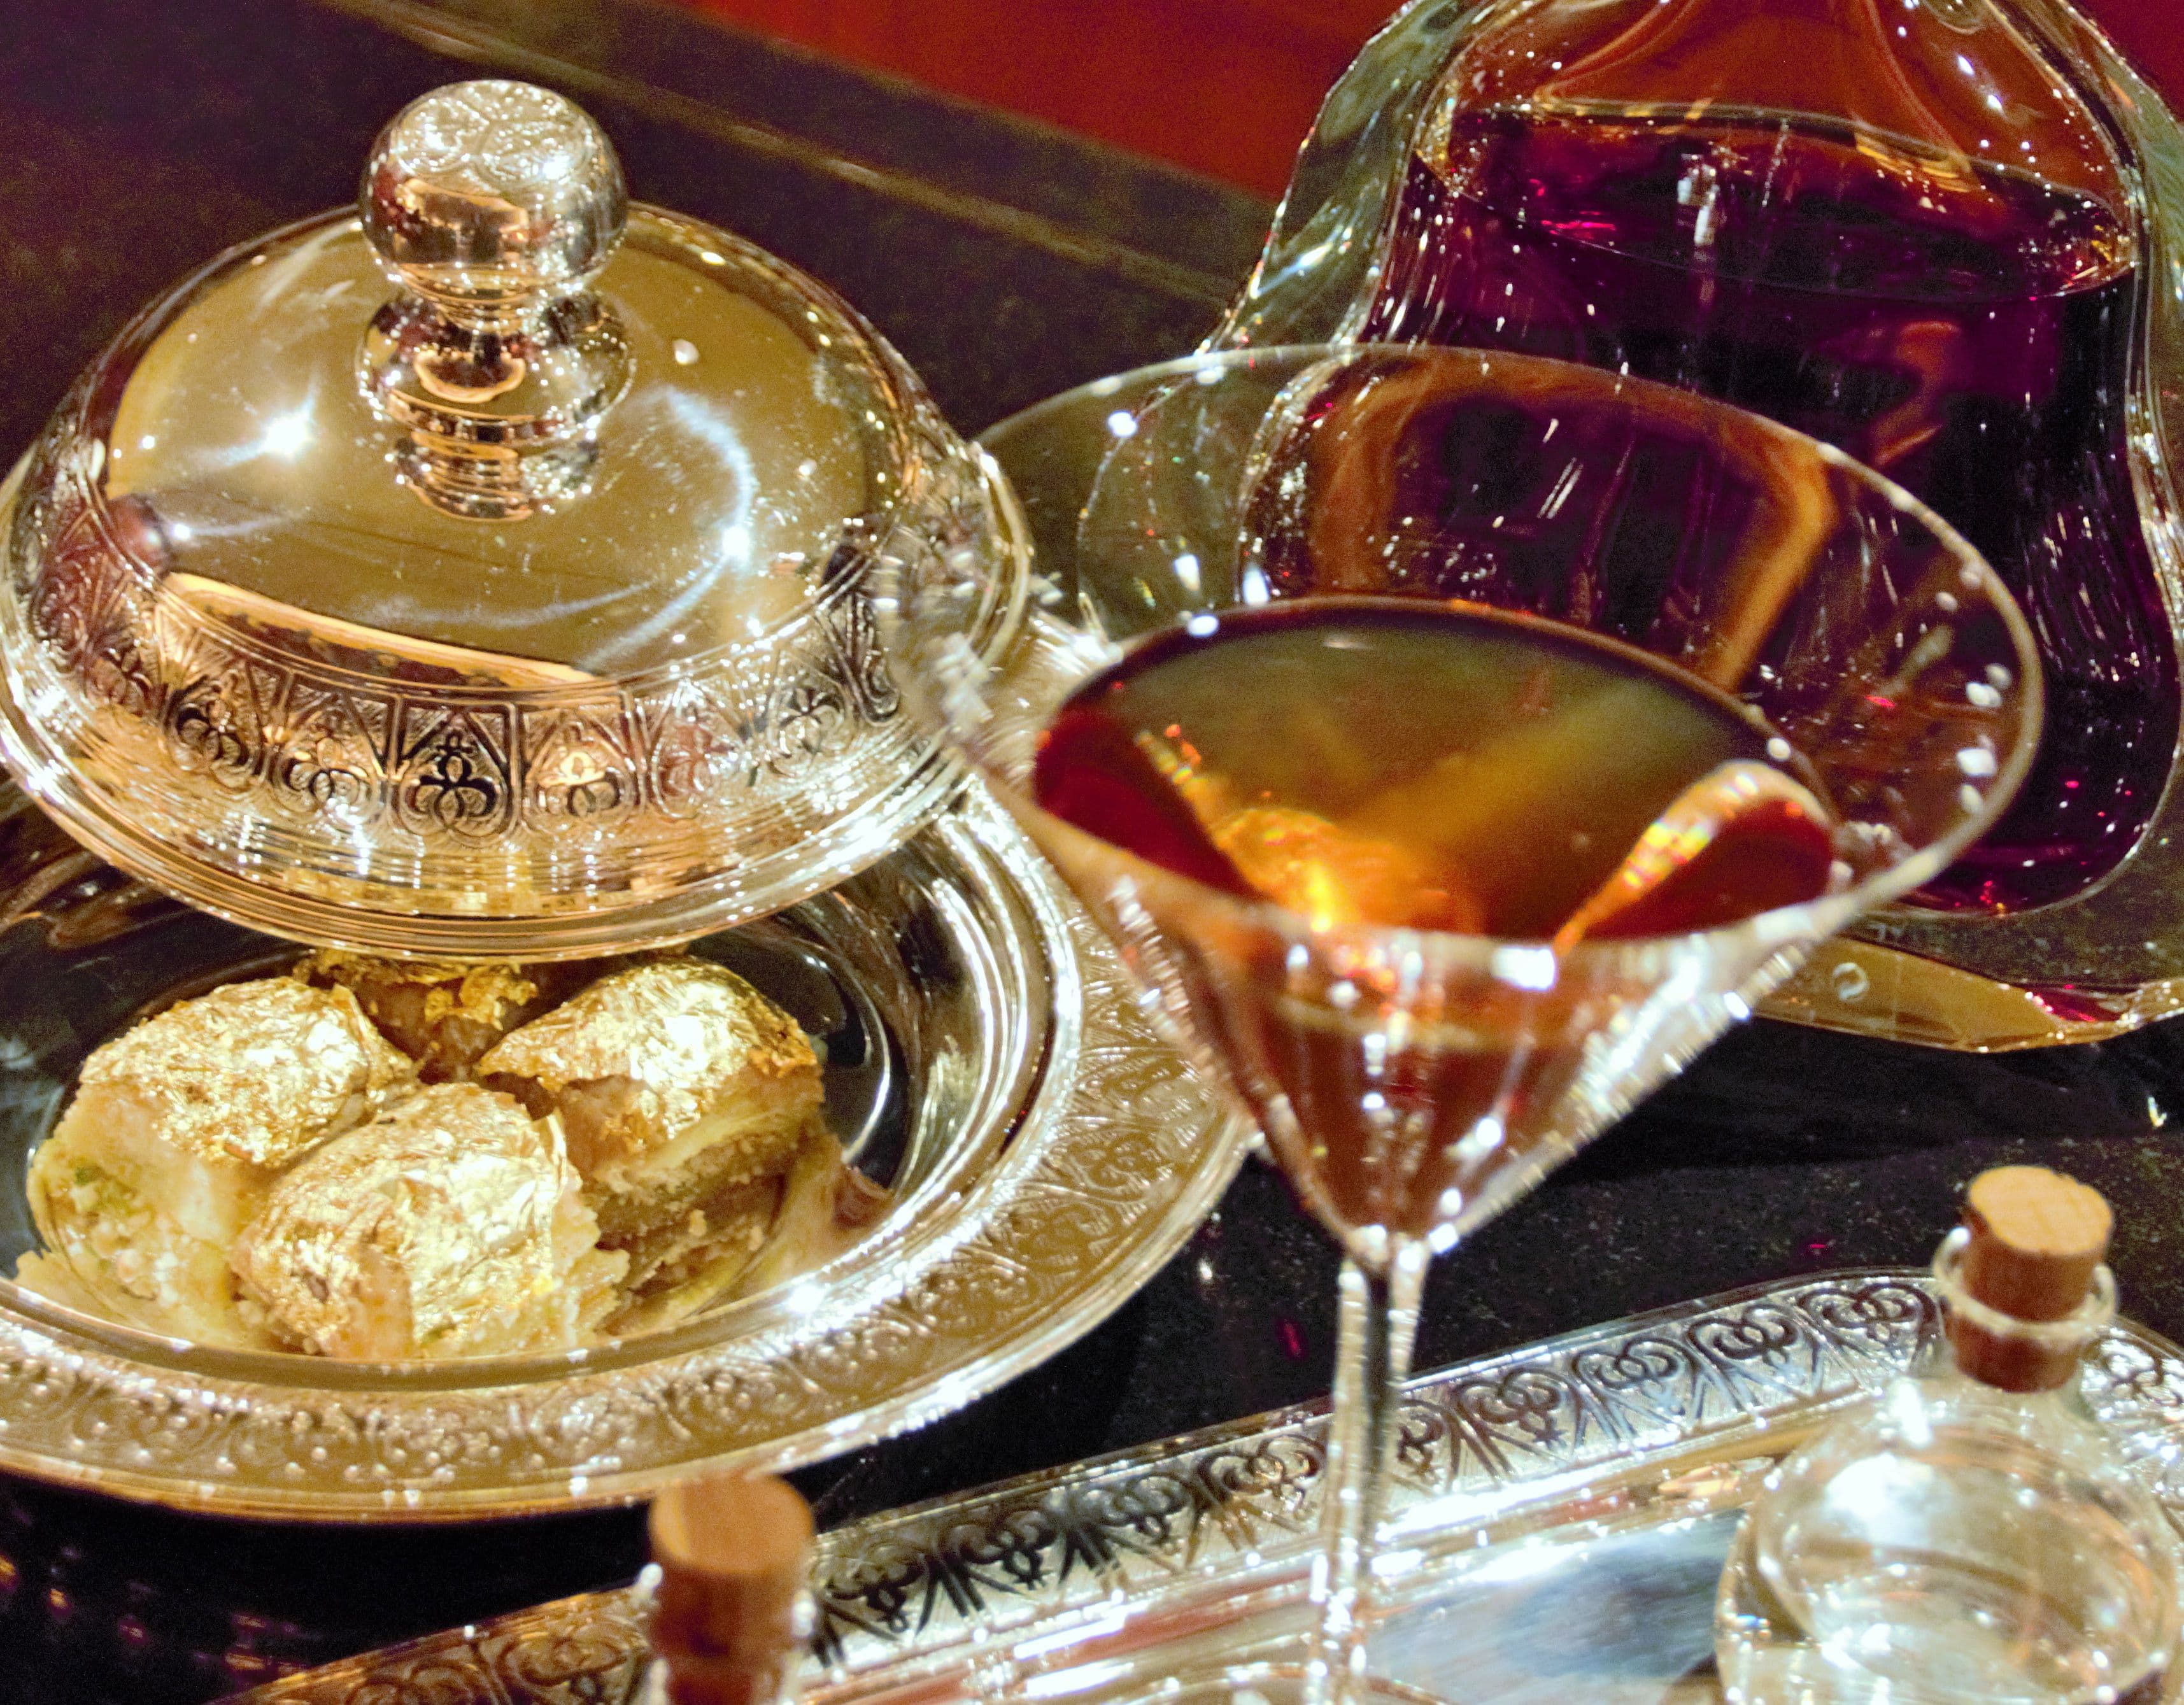 Golden Baklava from Istanbul